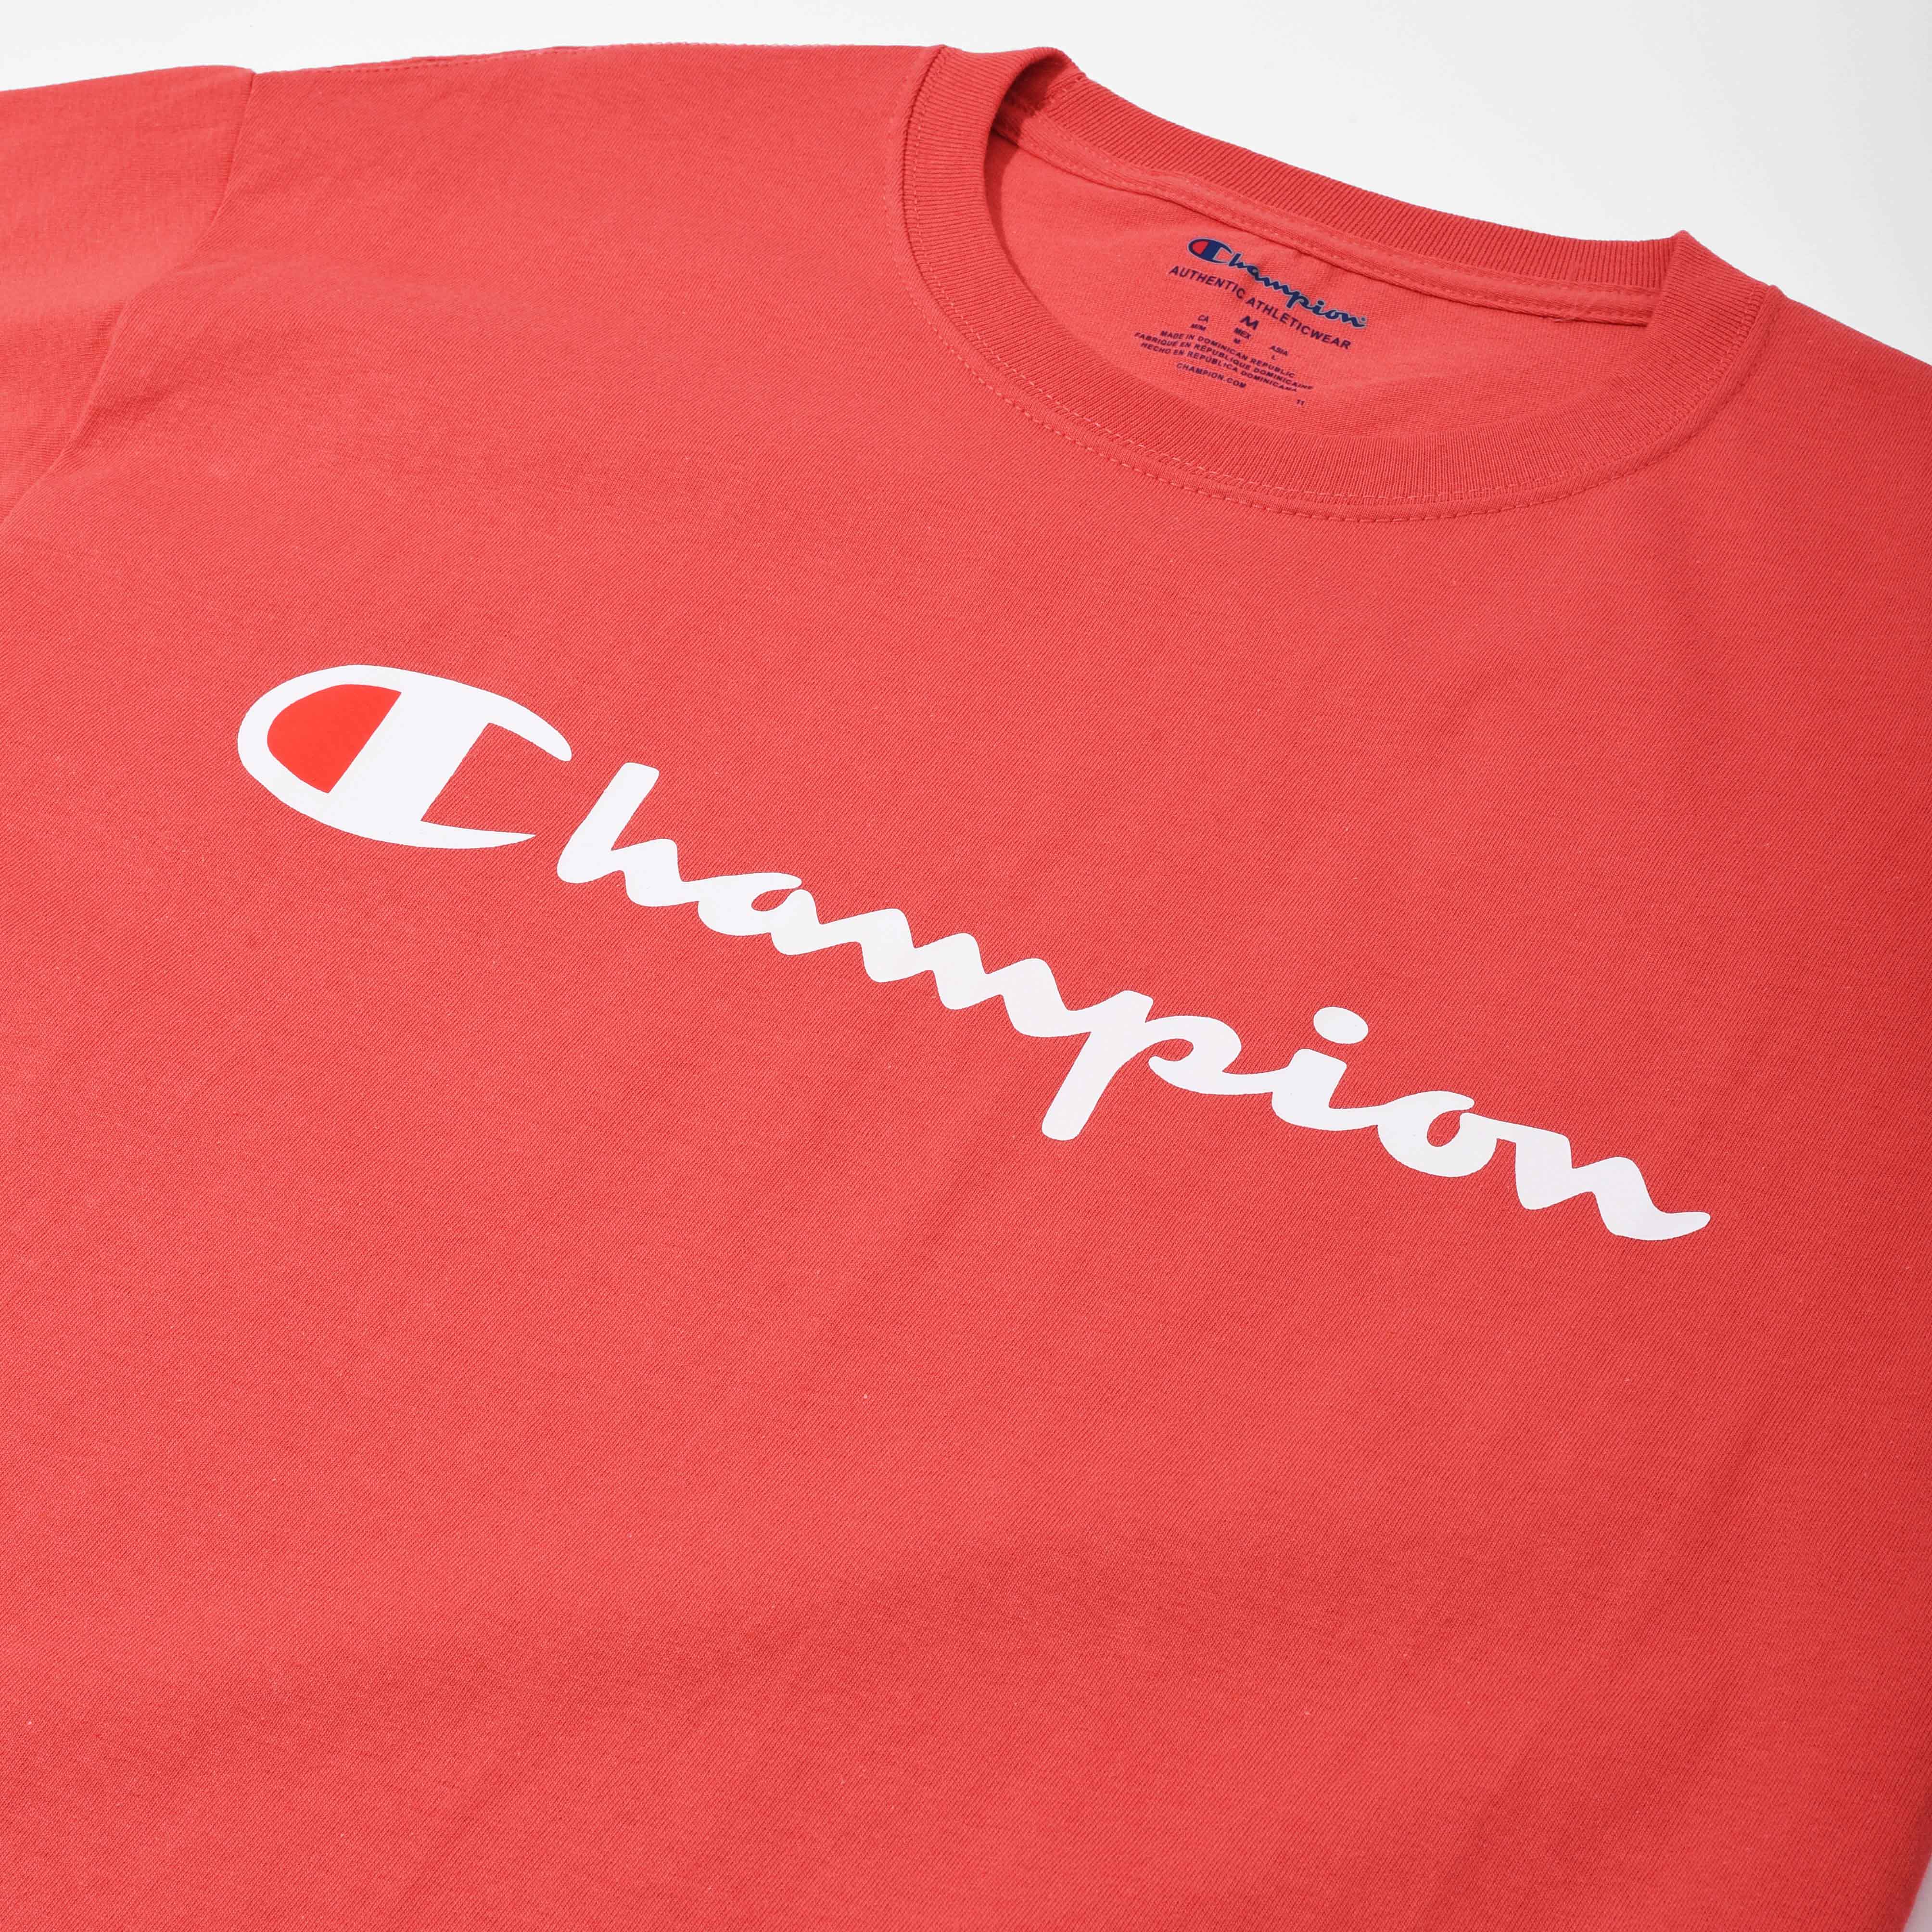 Champion Tagless Tshirt, Printed Logo - Red River Clay